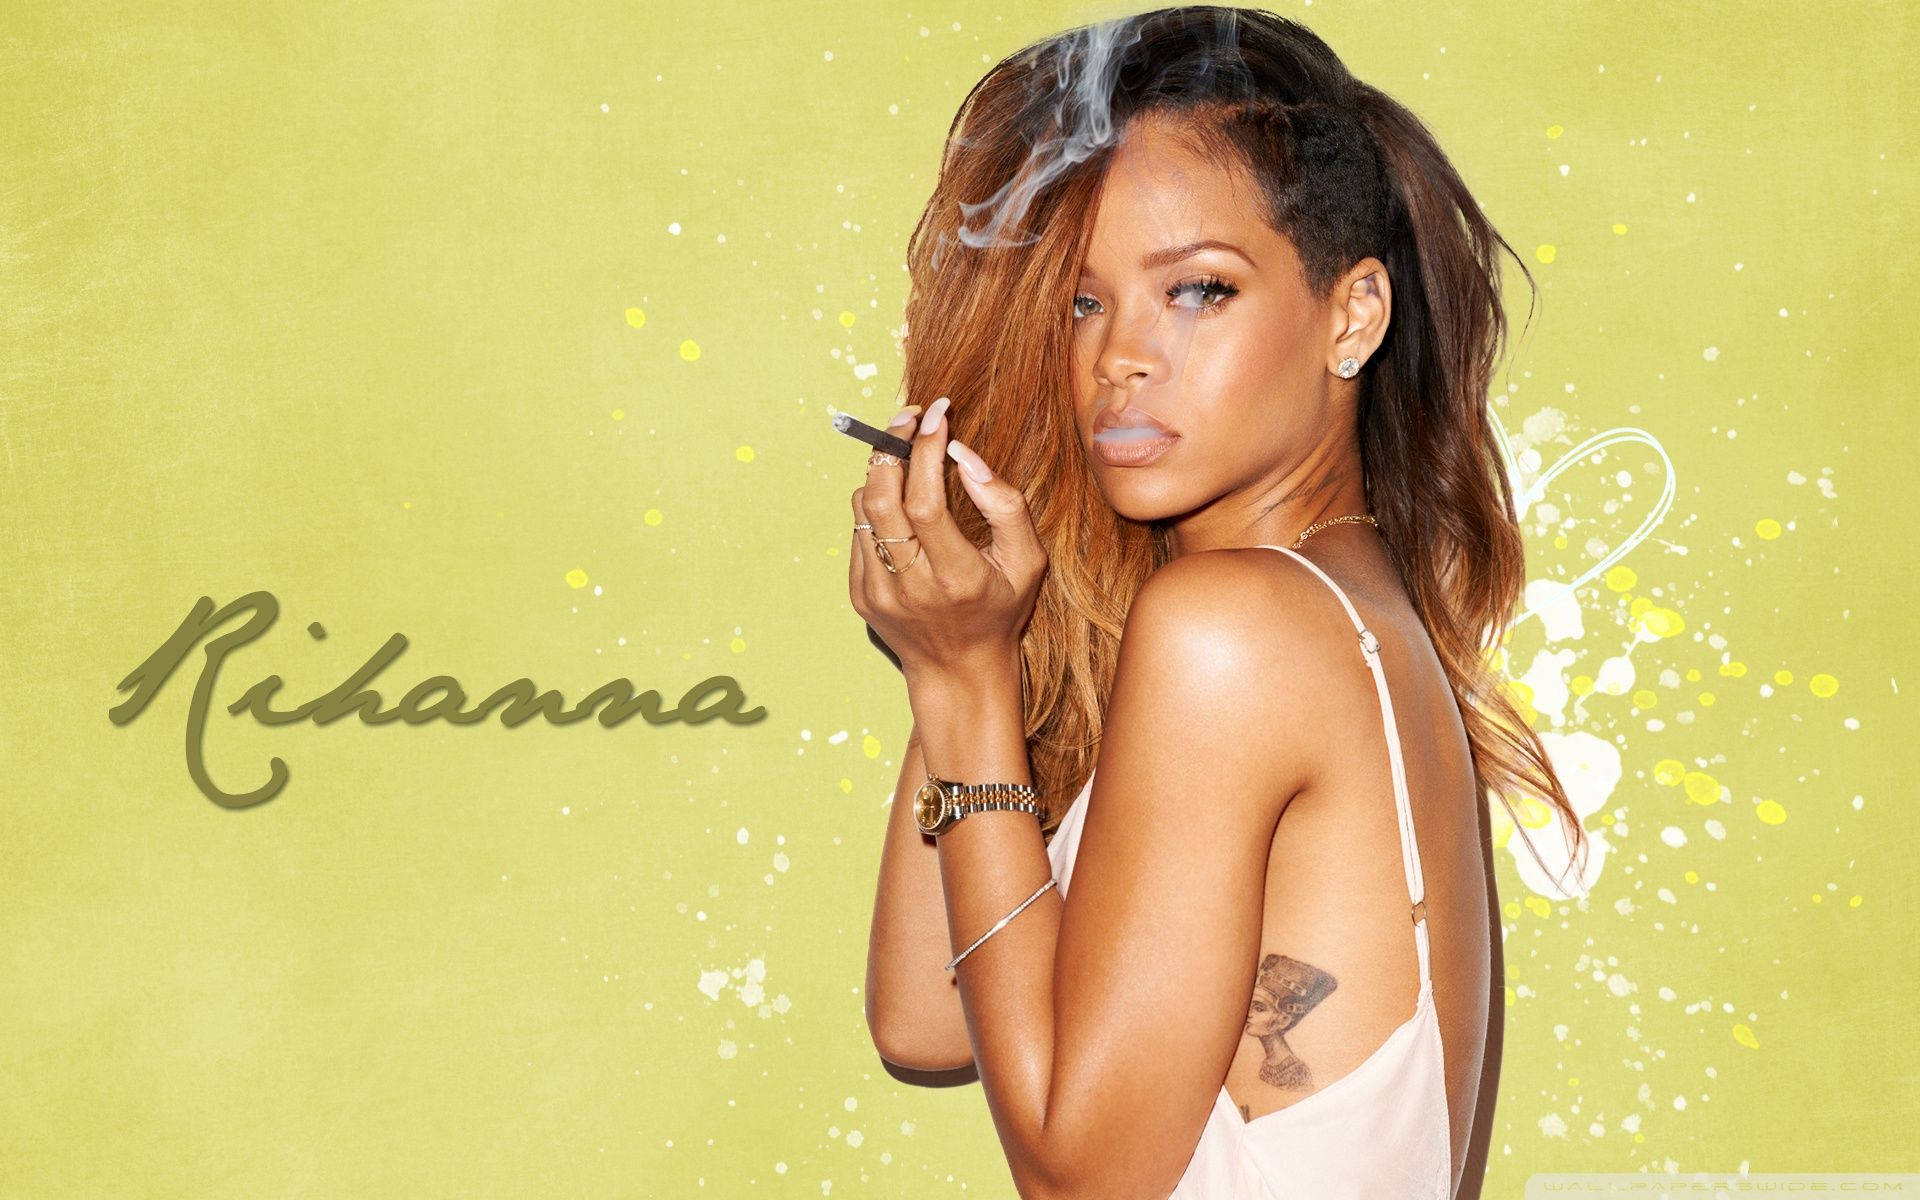 Smoking Rihanna In White Dress Background